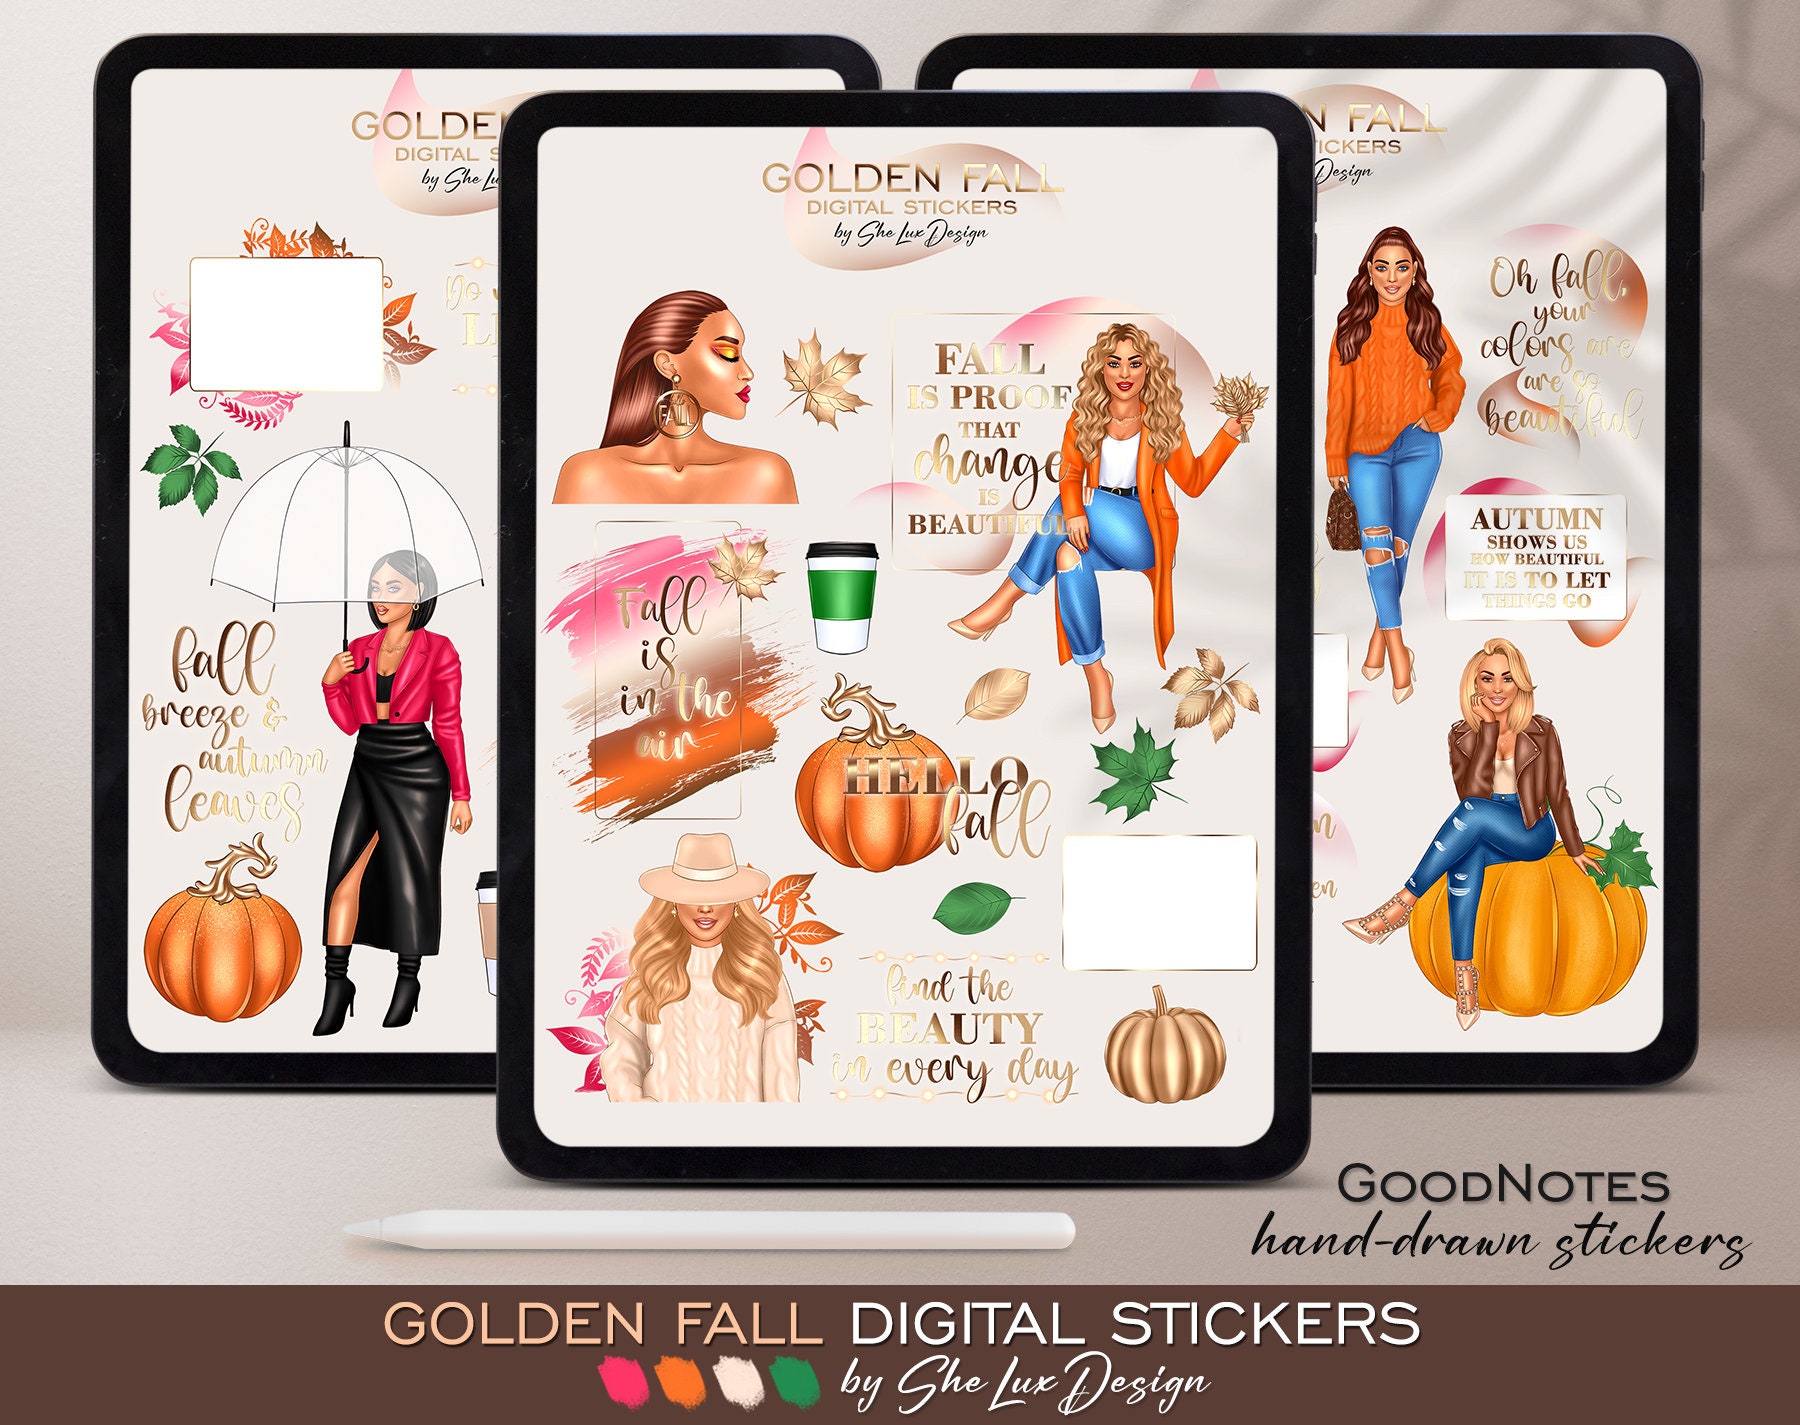 orange aesthetic sticker pack Sticker for Sale by VBNART